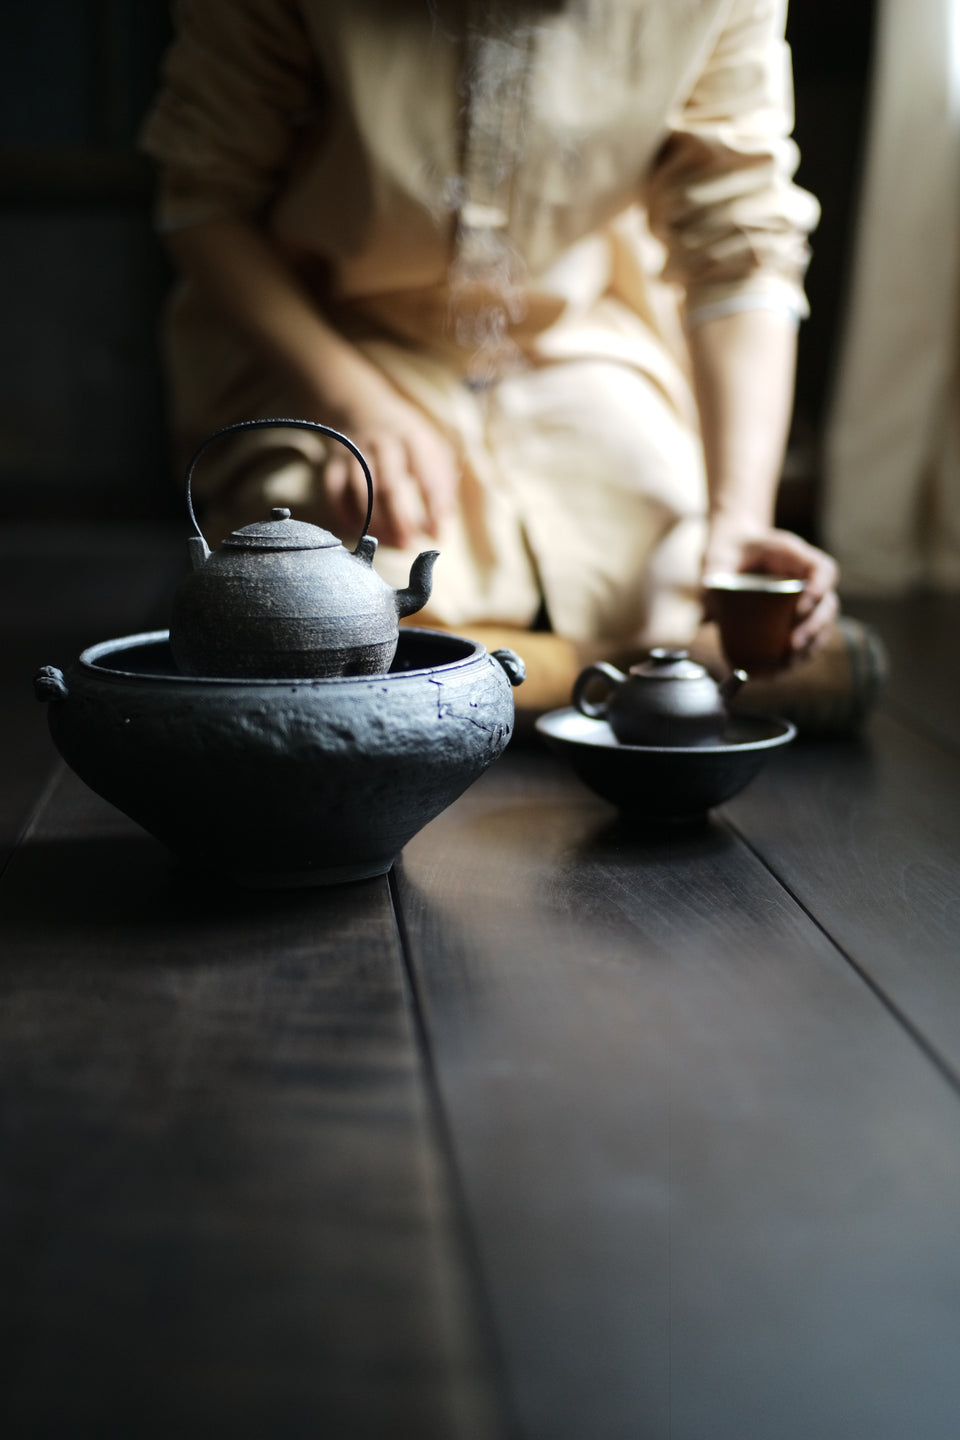 Natural Earth Sanwan 3-Bend Neck Tea Kettle by Cheng Wei